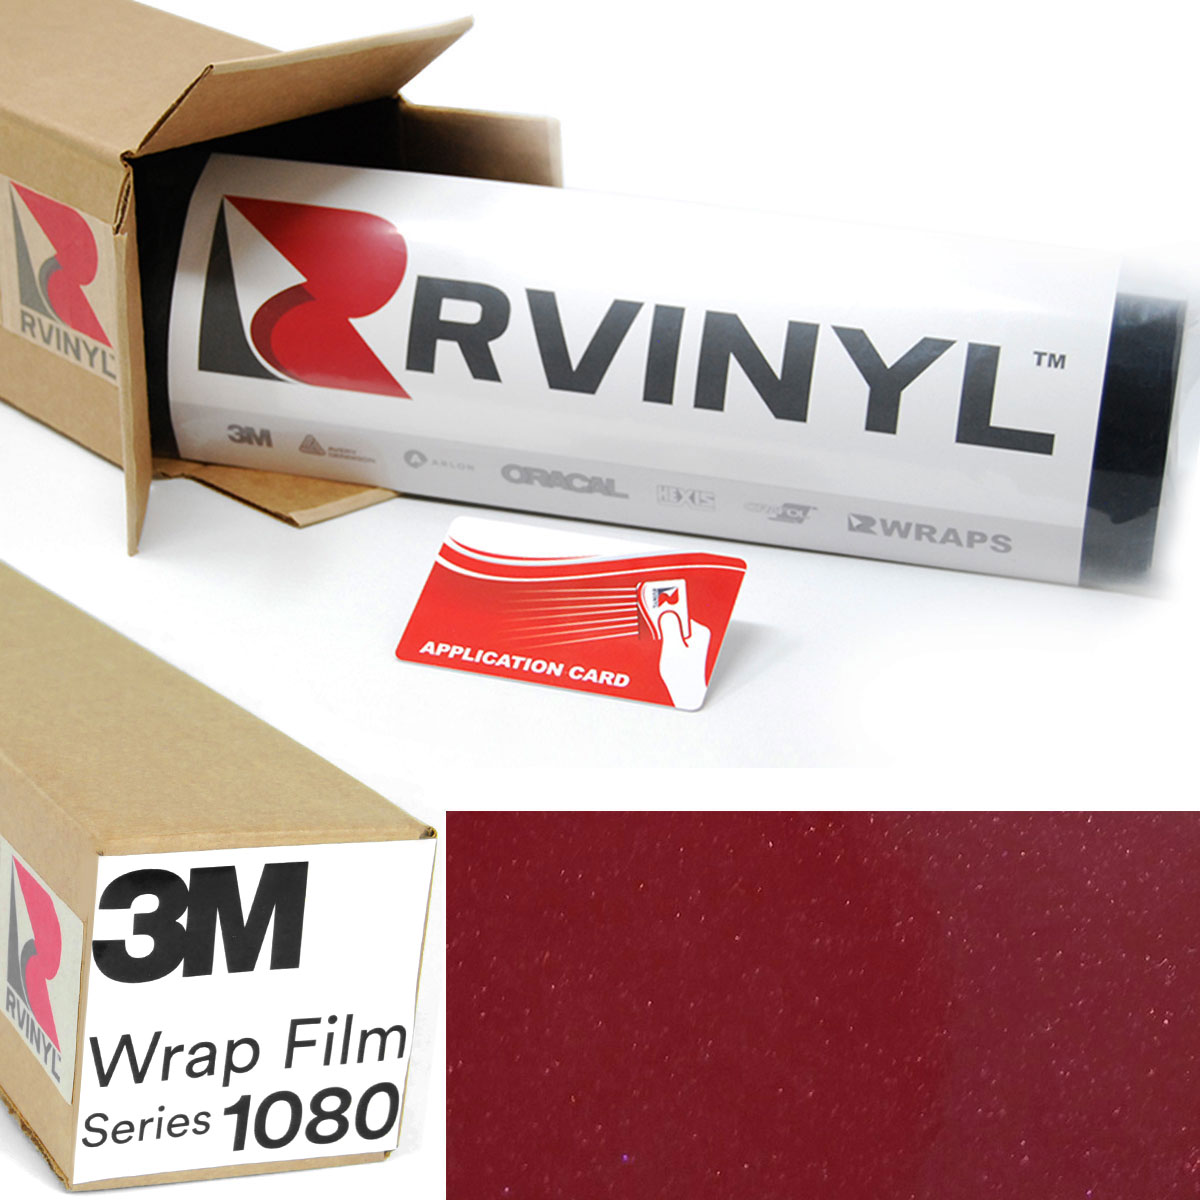 Car Wrap Vinyl Film Sample Size 3M 1080 GP253 Gloss Cinder Spark RED 3in x 5in 